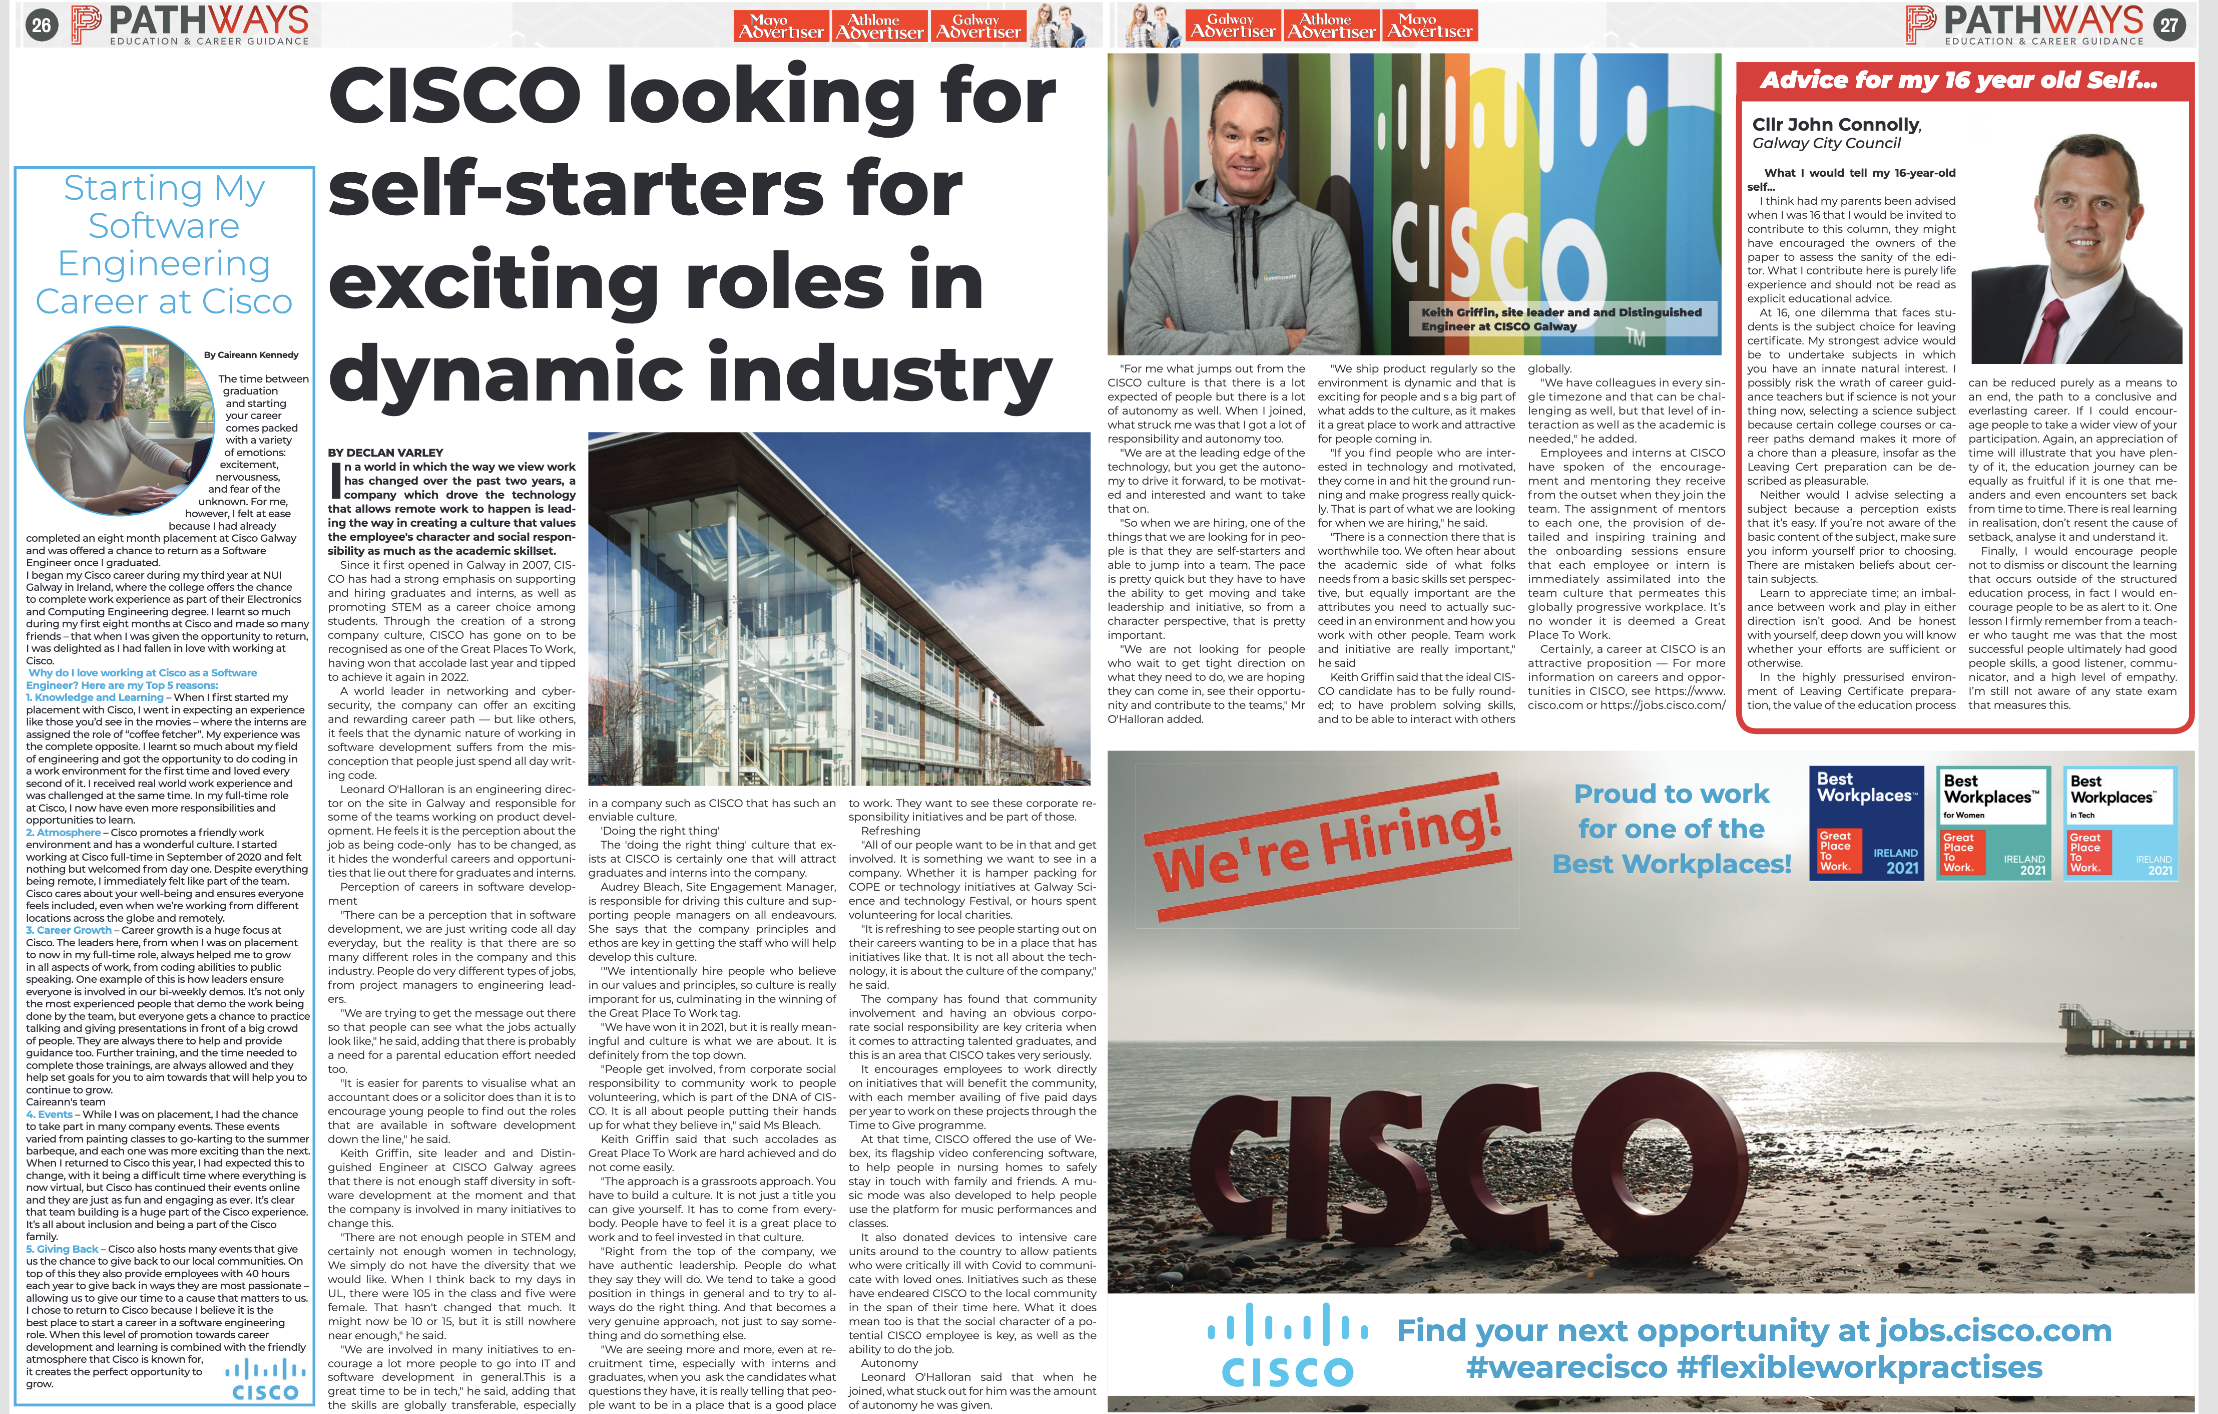 Cisco - Ad Galway Newspaper